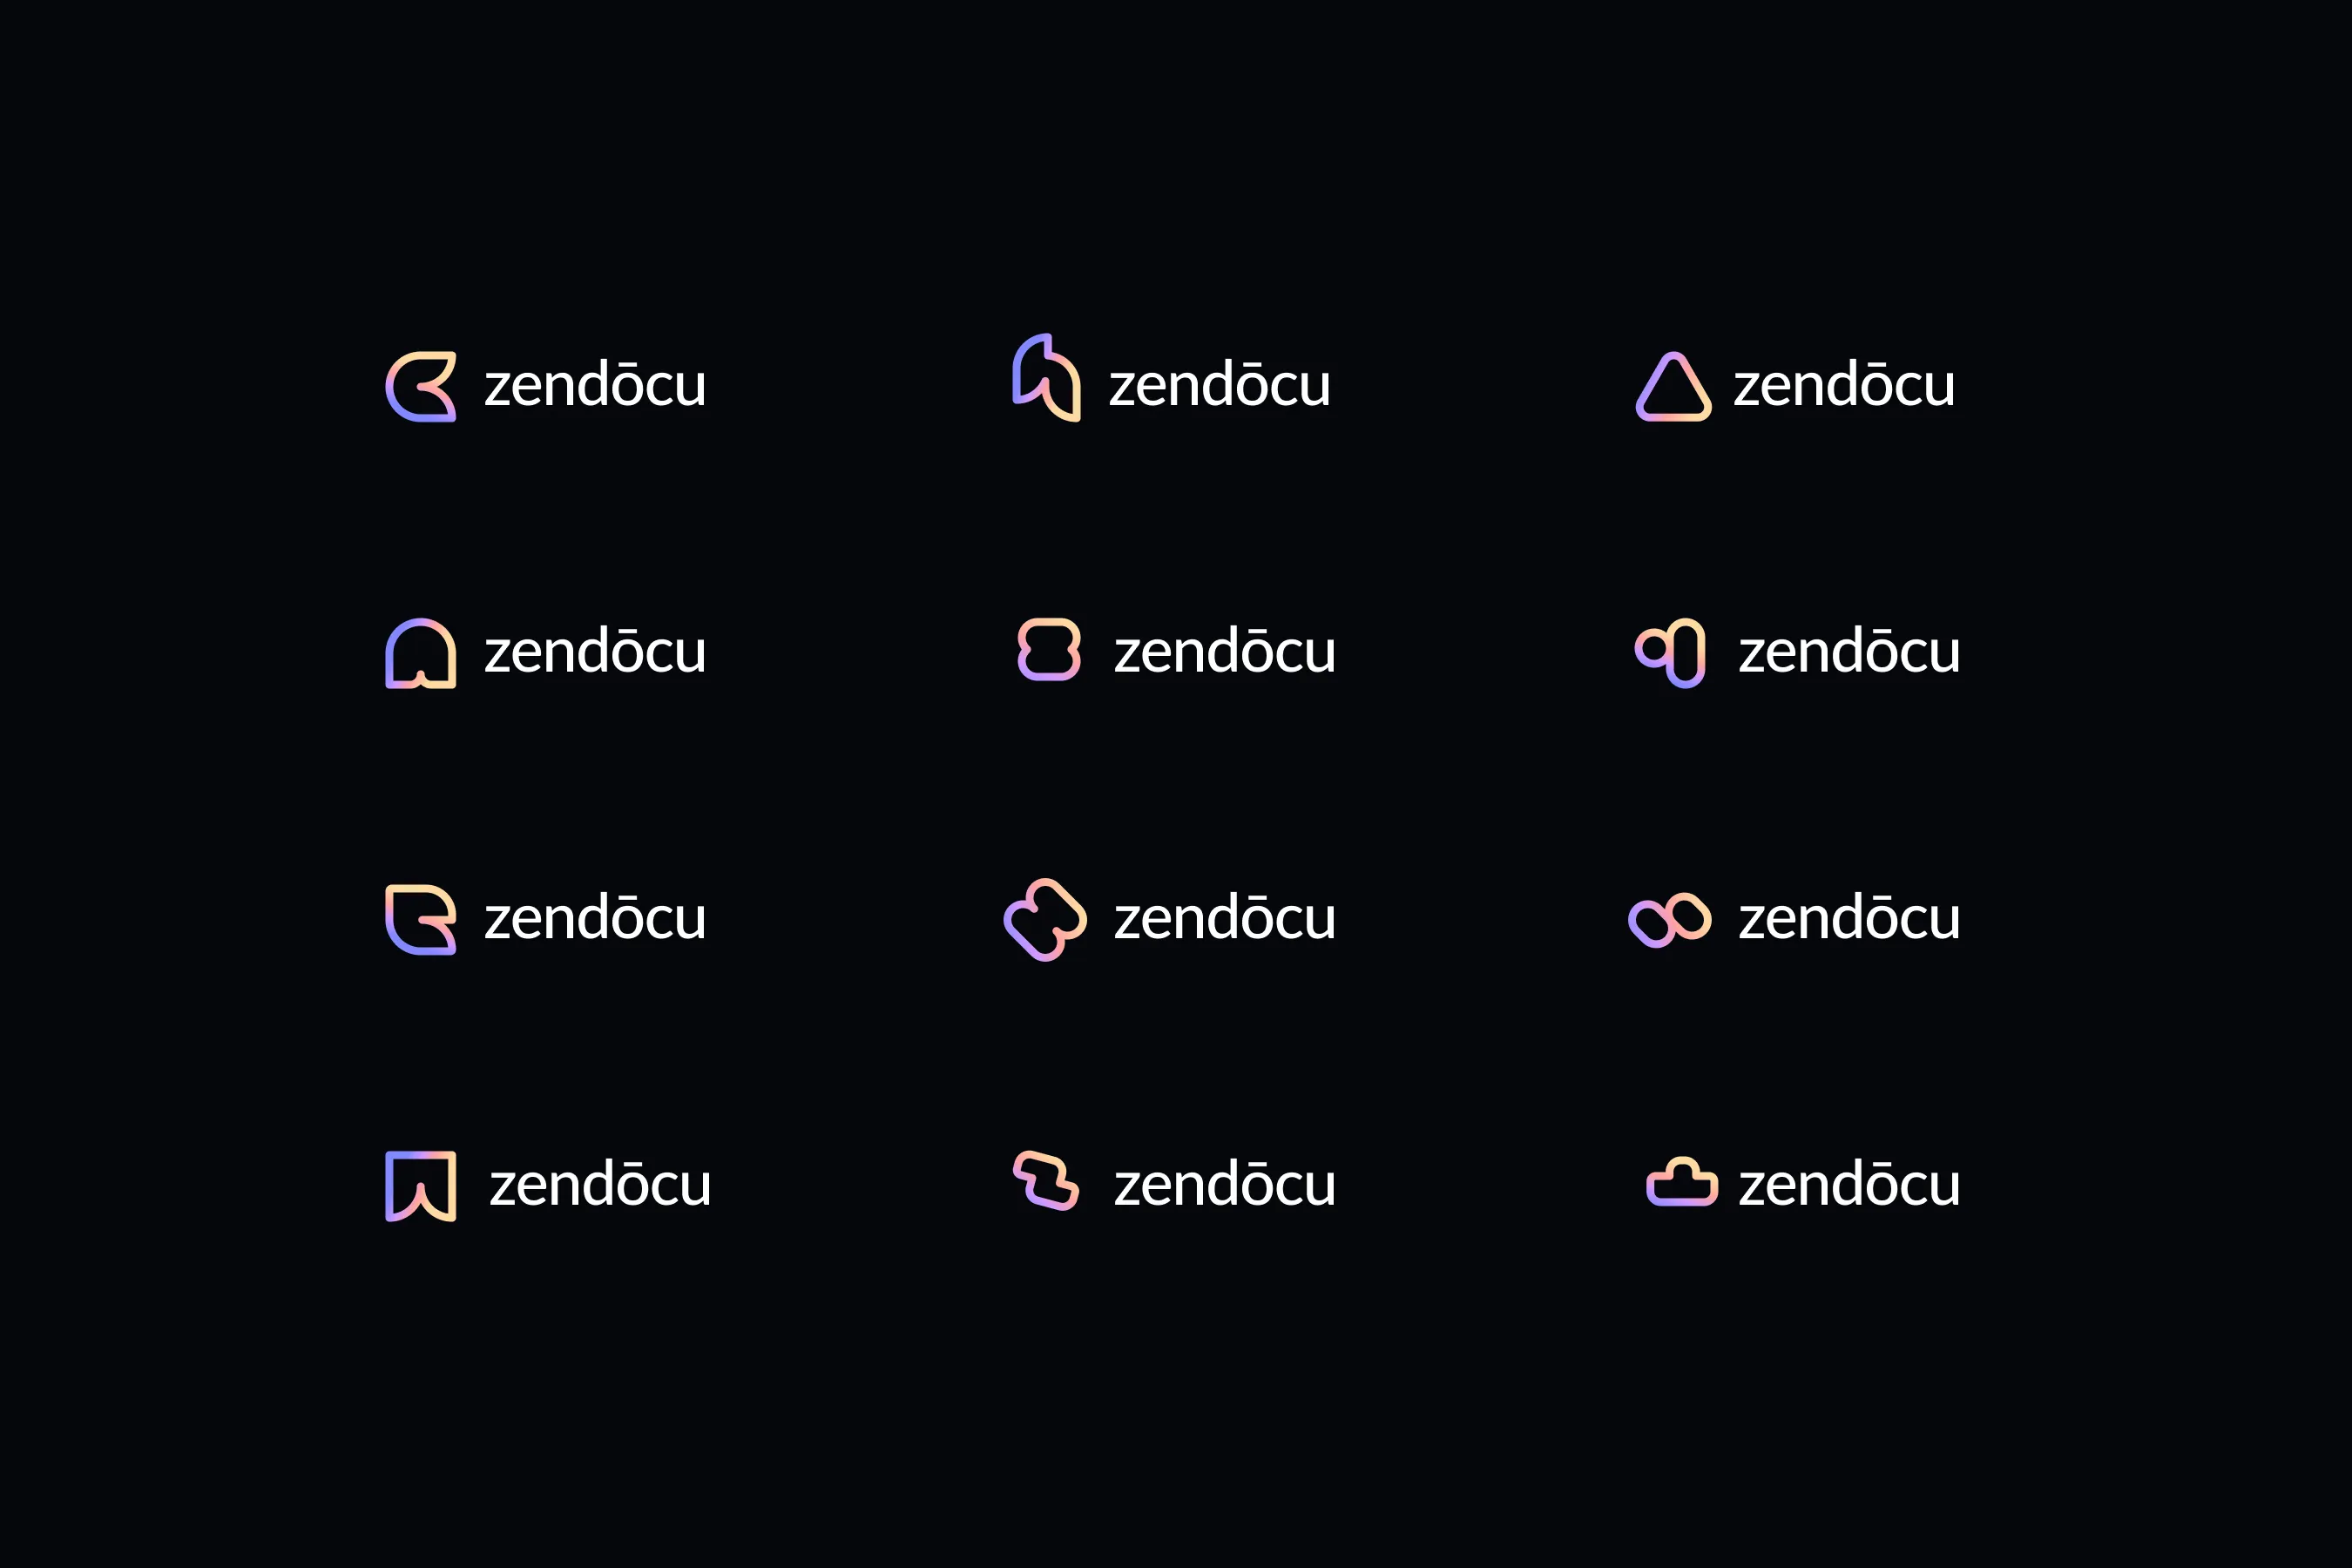 trying logos for zendocu